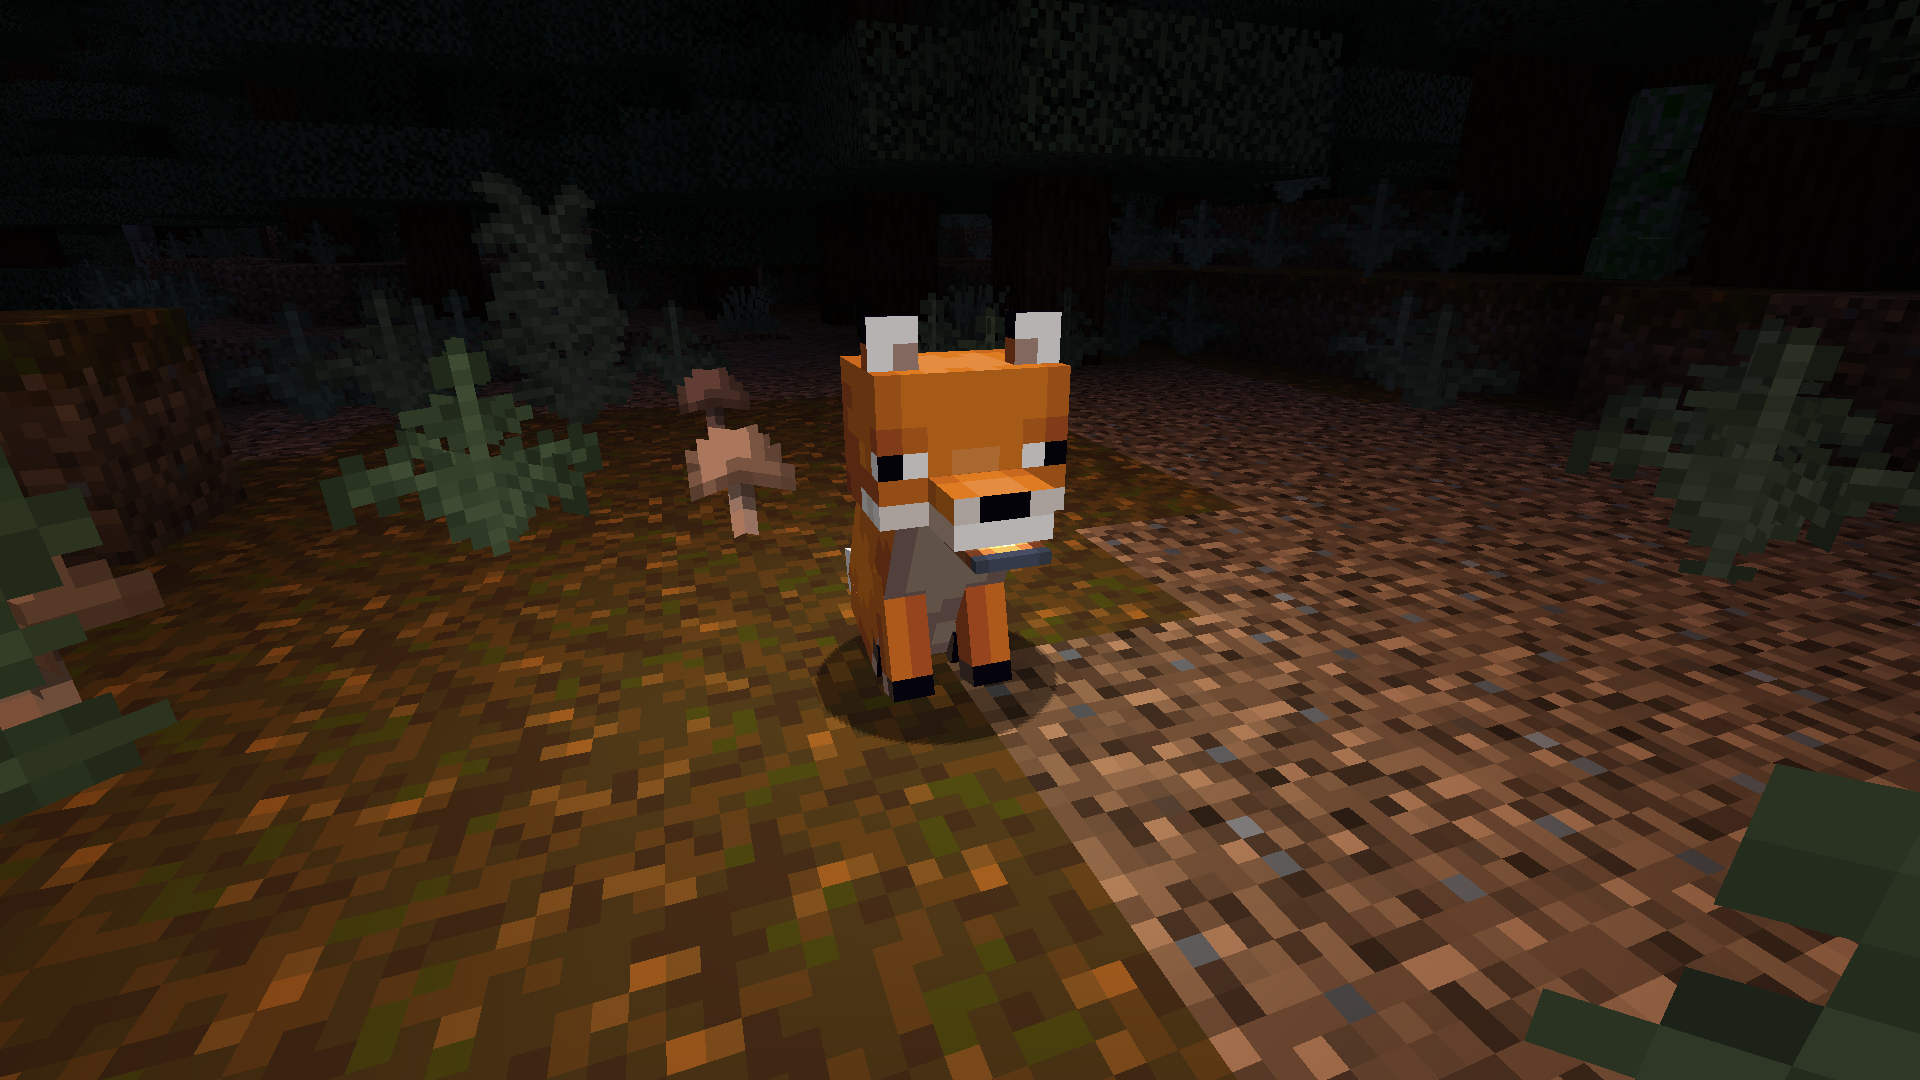 Fox holding lantern